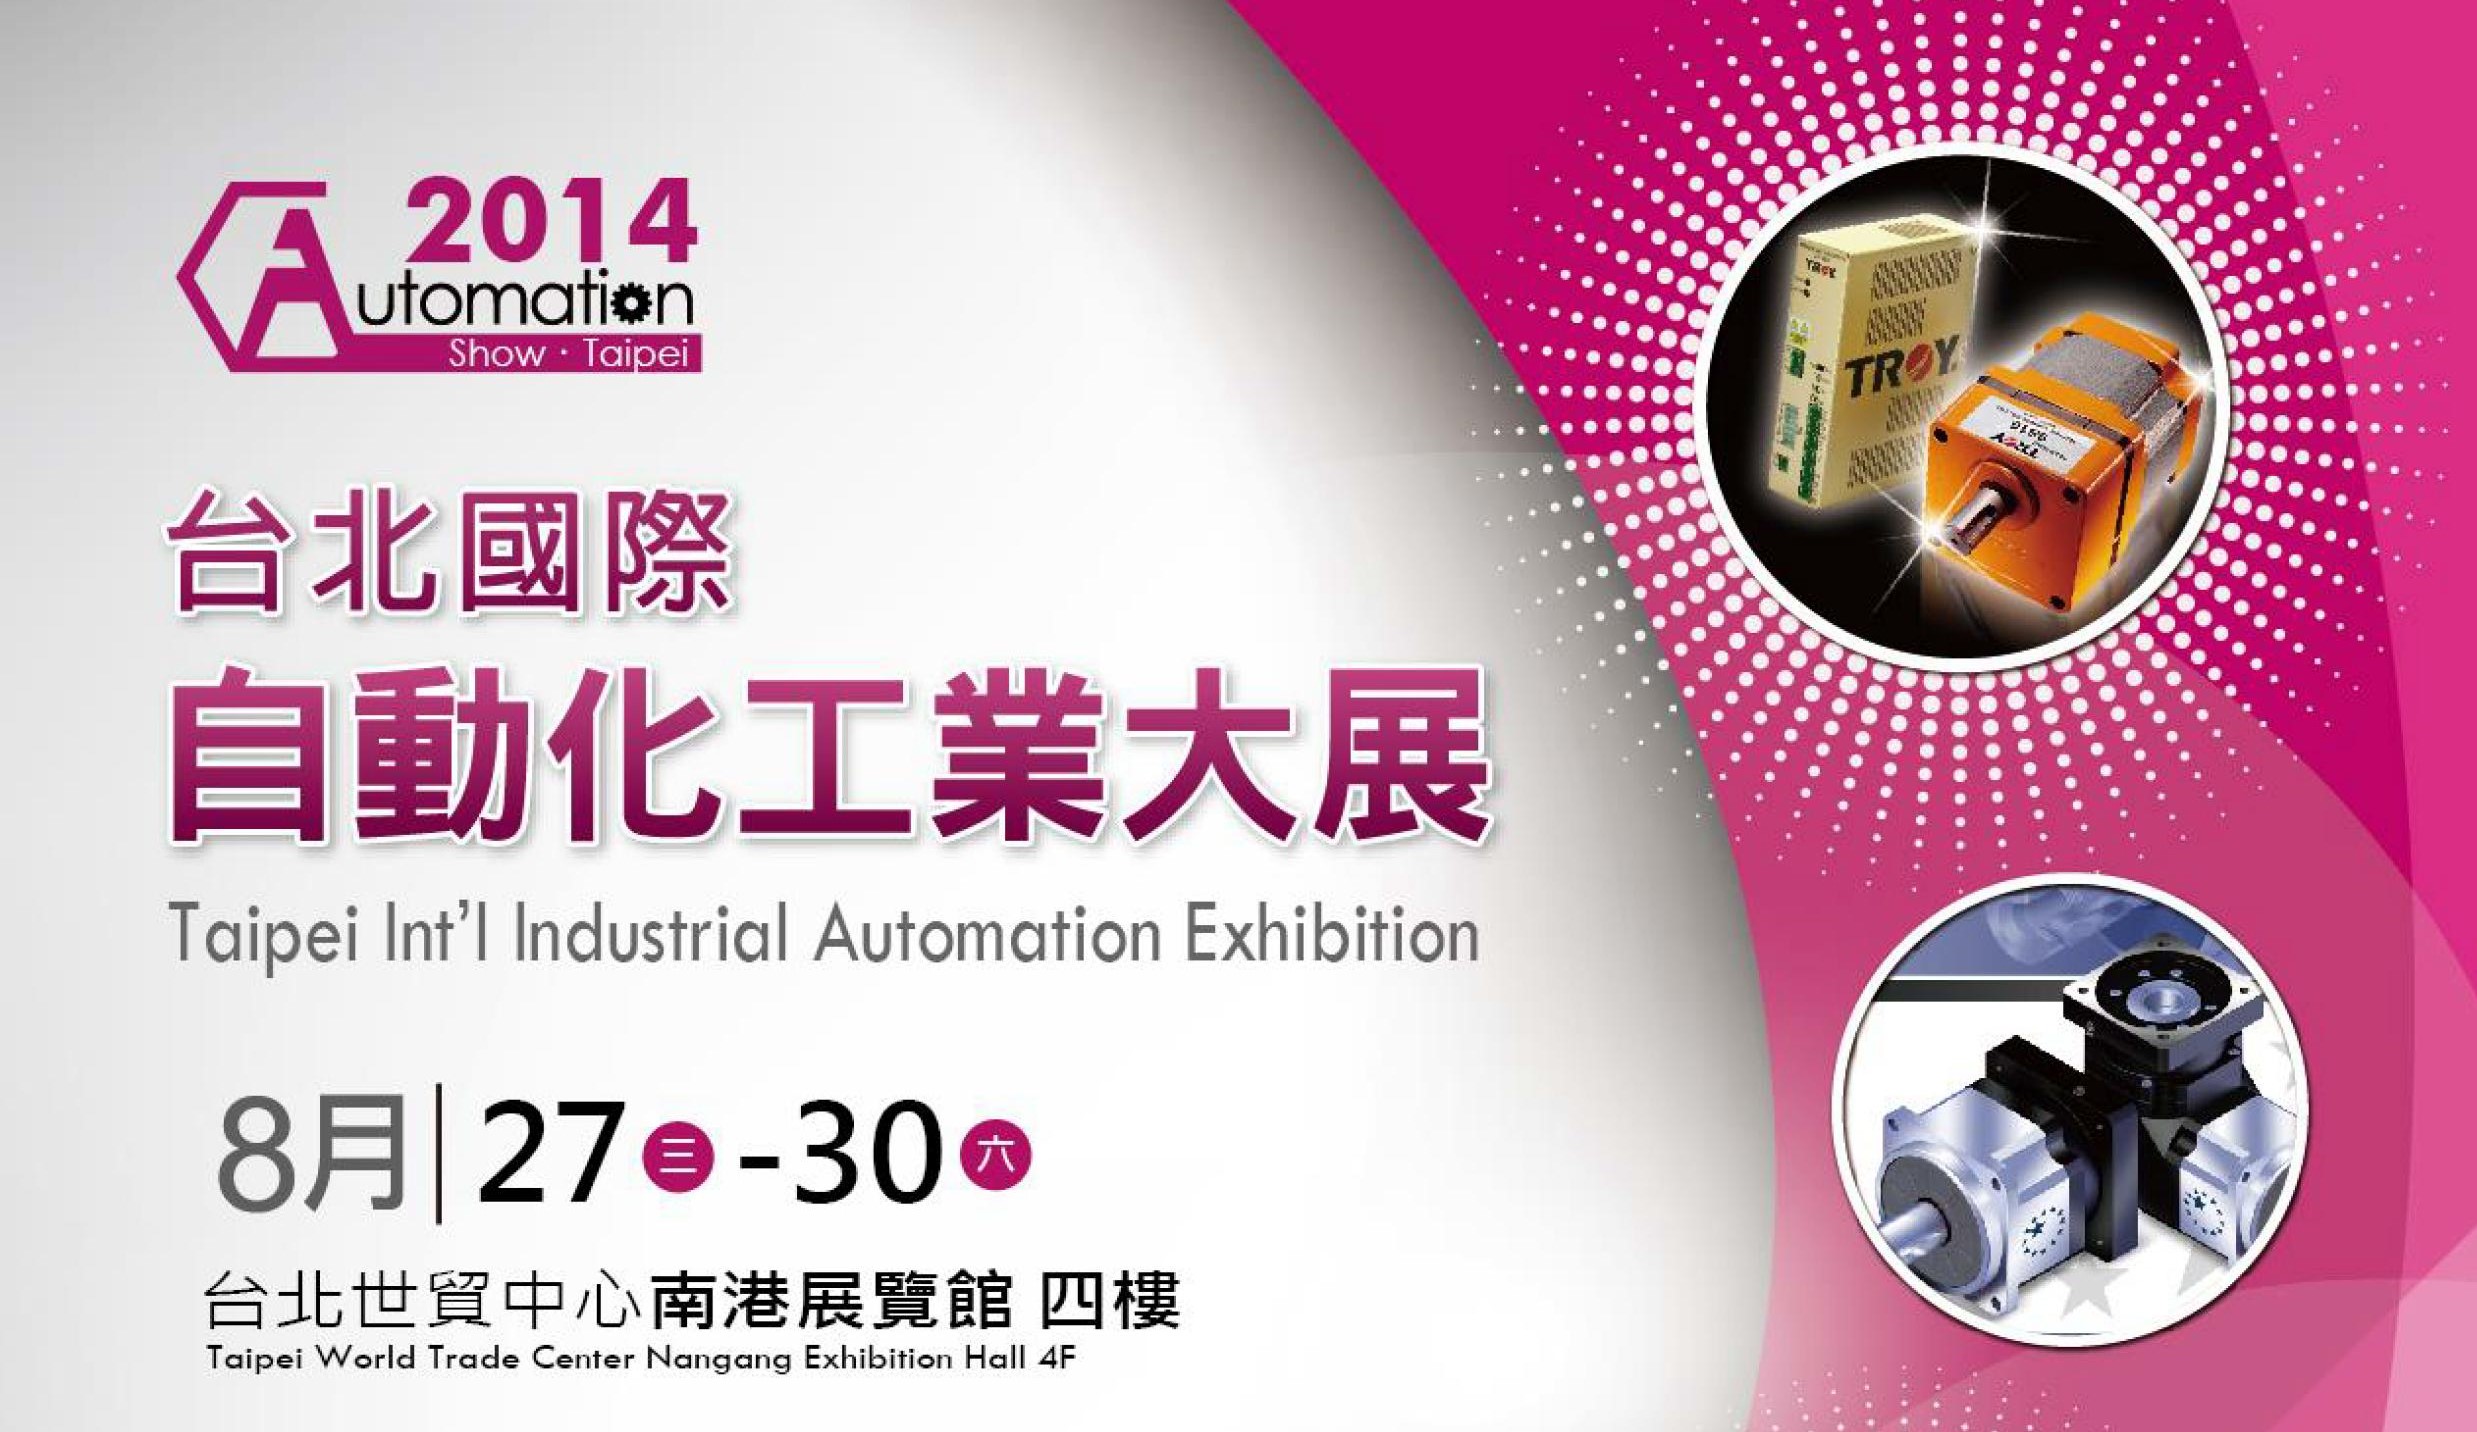 TWTC 2014 (Taipei International Industrial Automation Exhibition)